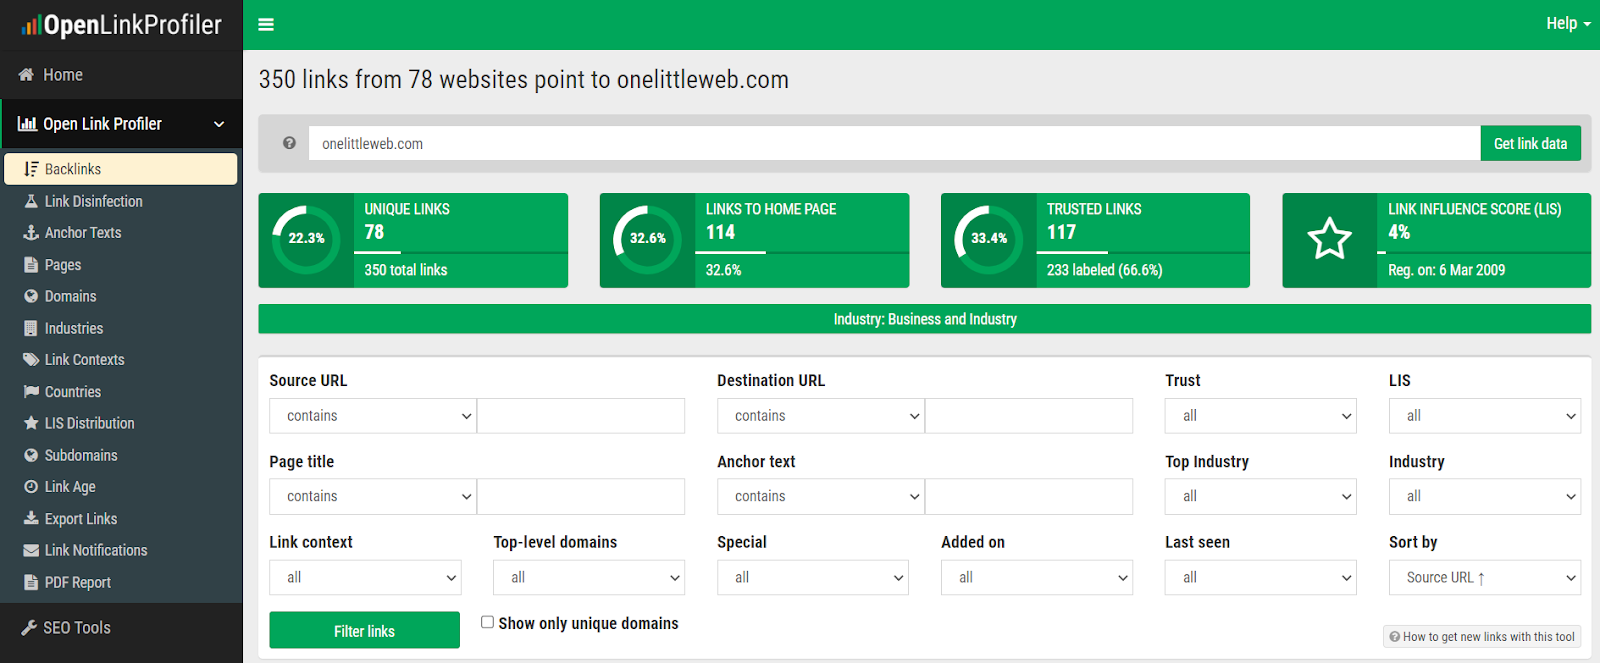 Open Link Profiler showing the backlink results for OneLittleWeb